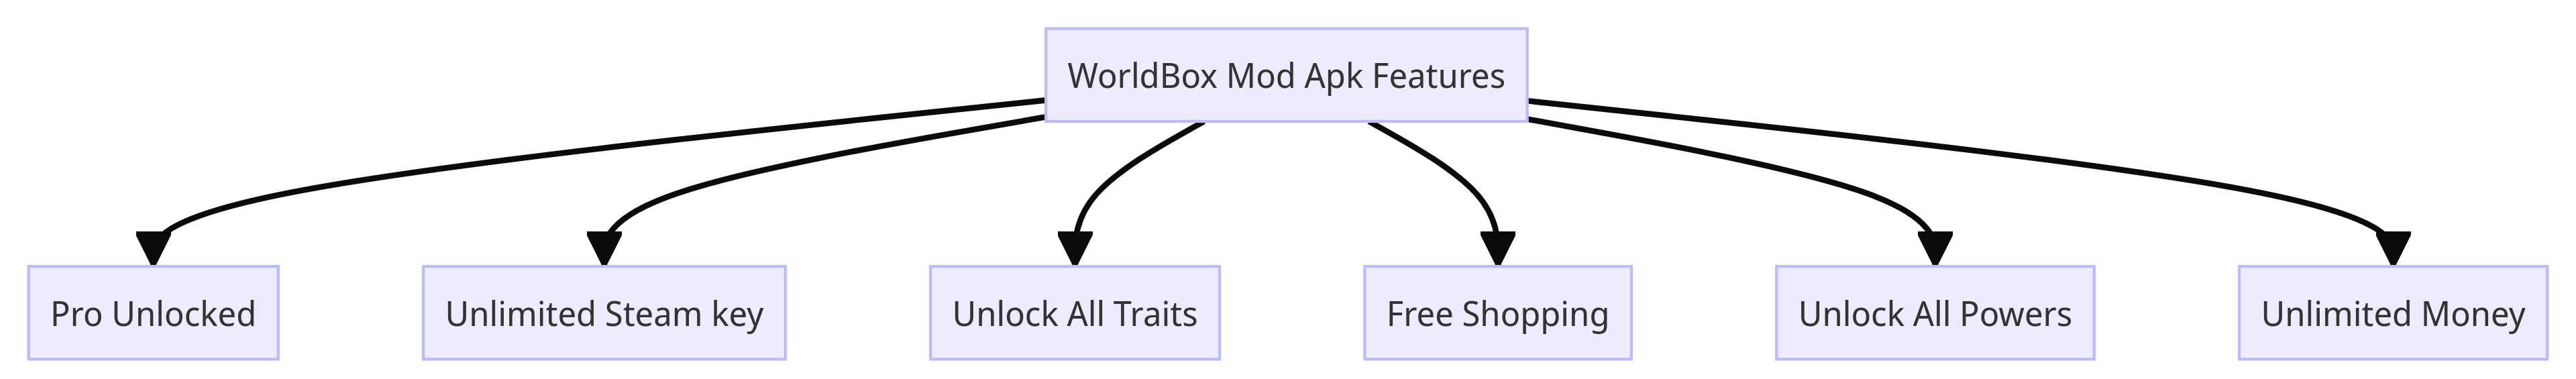 WorldBox Mod Apk Features